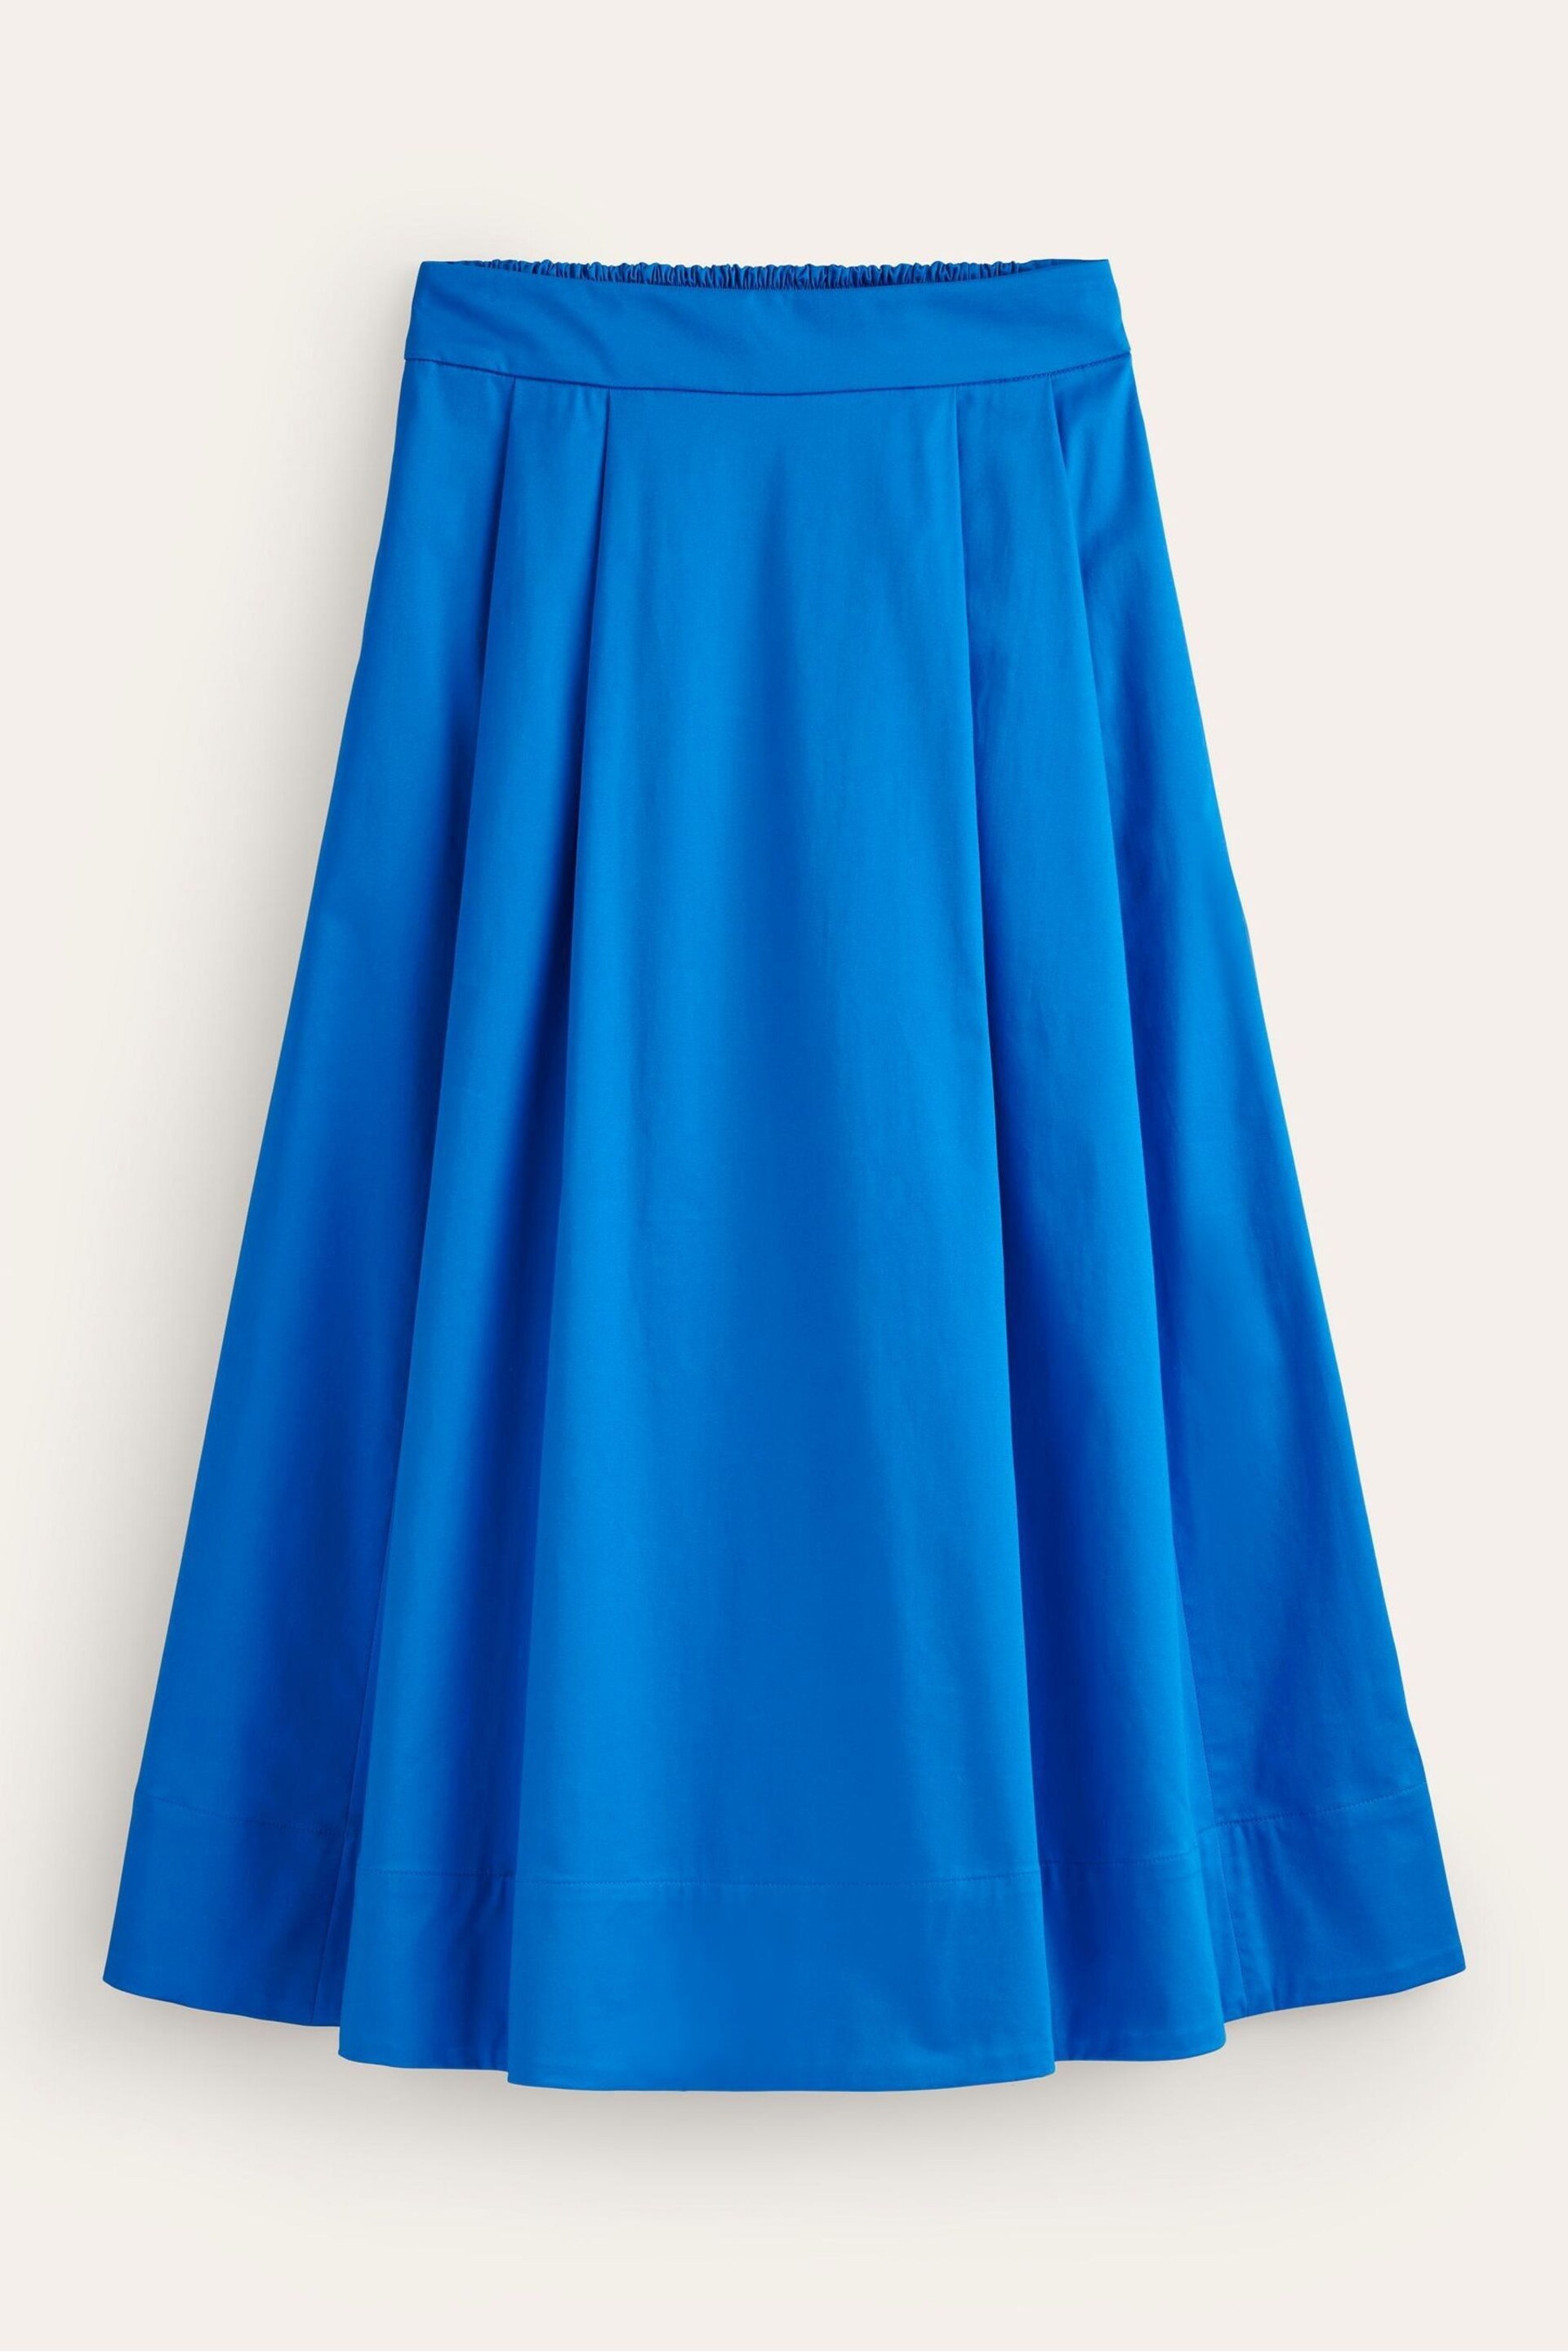 Boden Blue Petite Isabella Cotton Sateen Skirt - Image 5 of 5